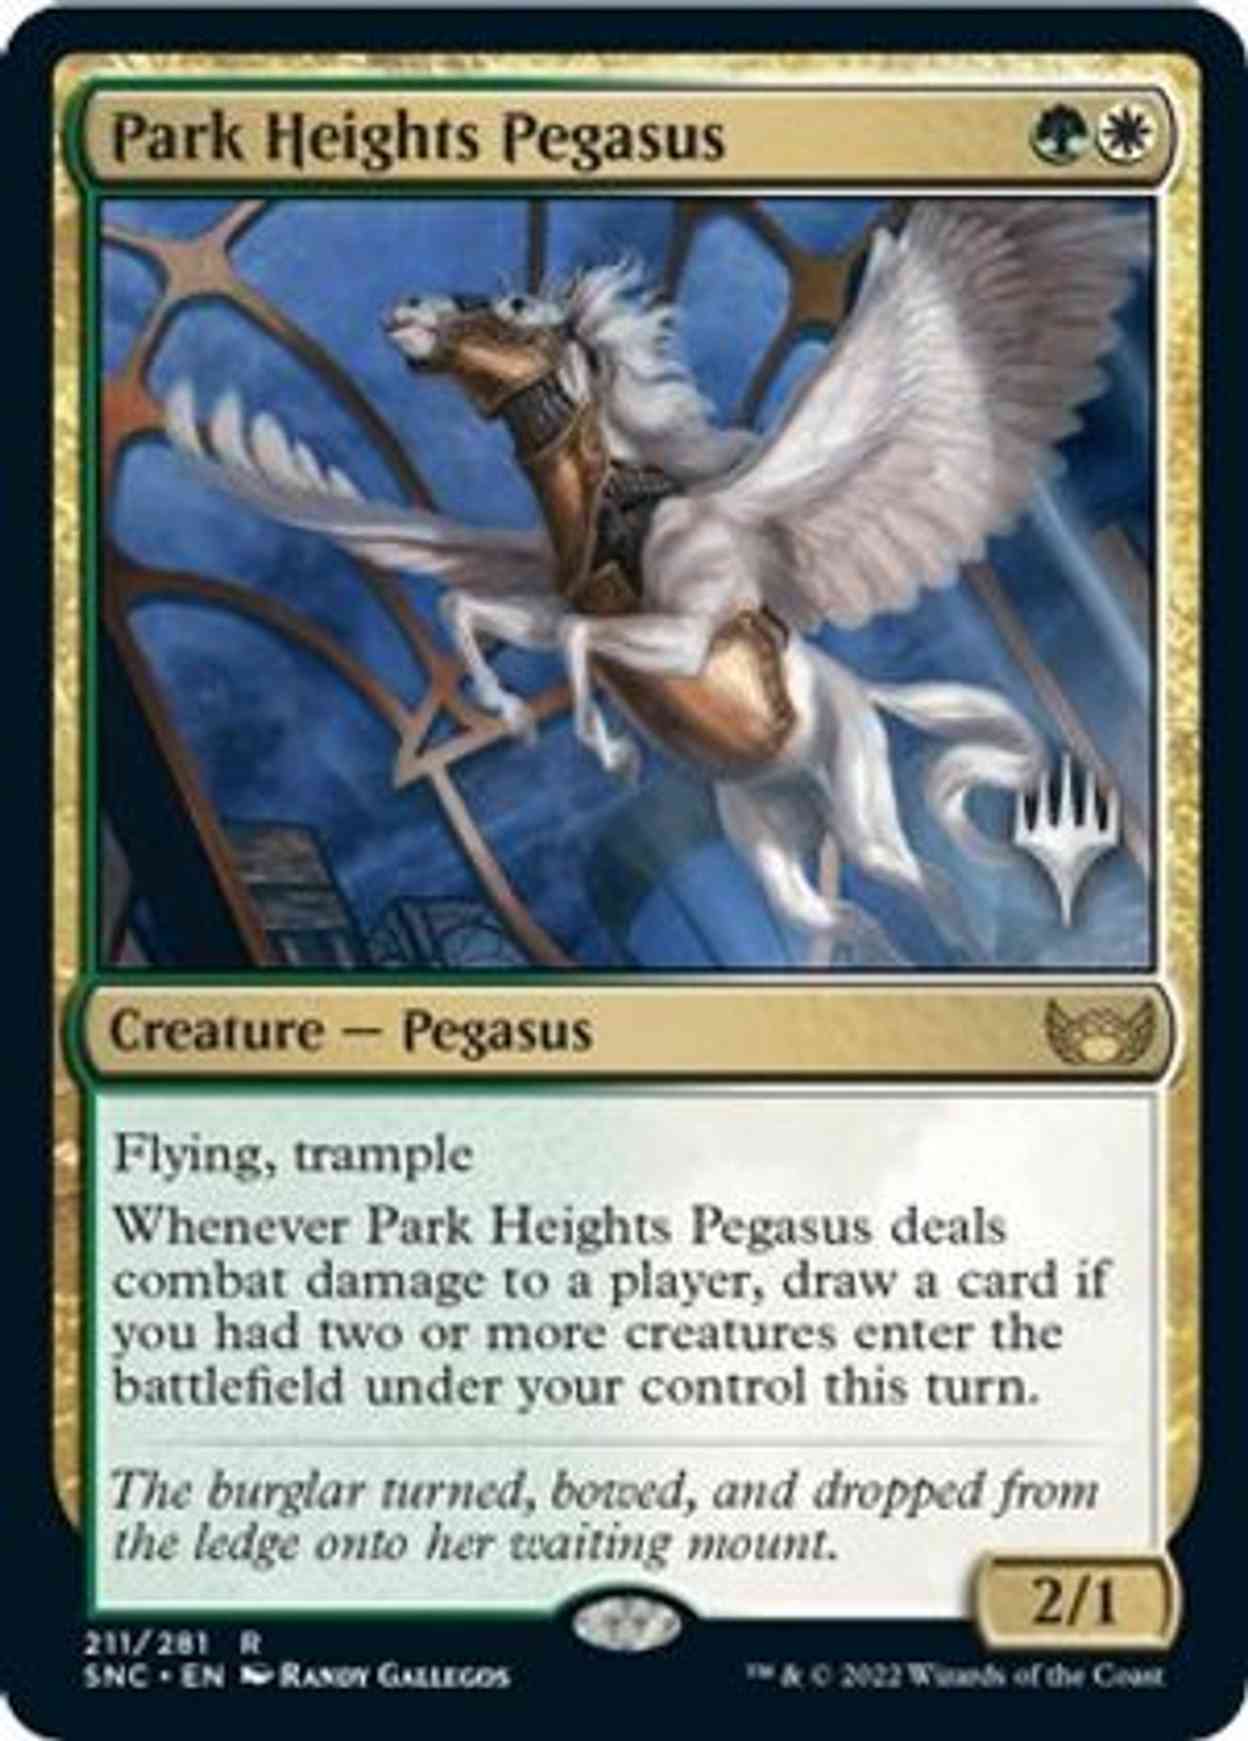 Park Heights Pegasus magic card front